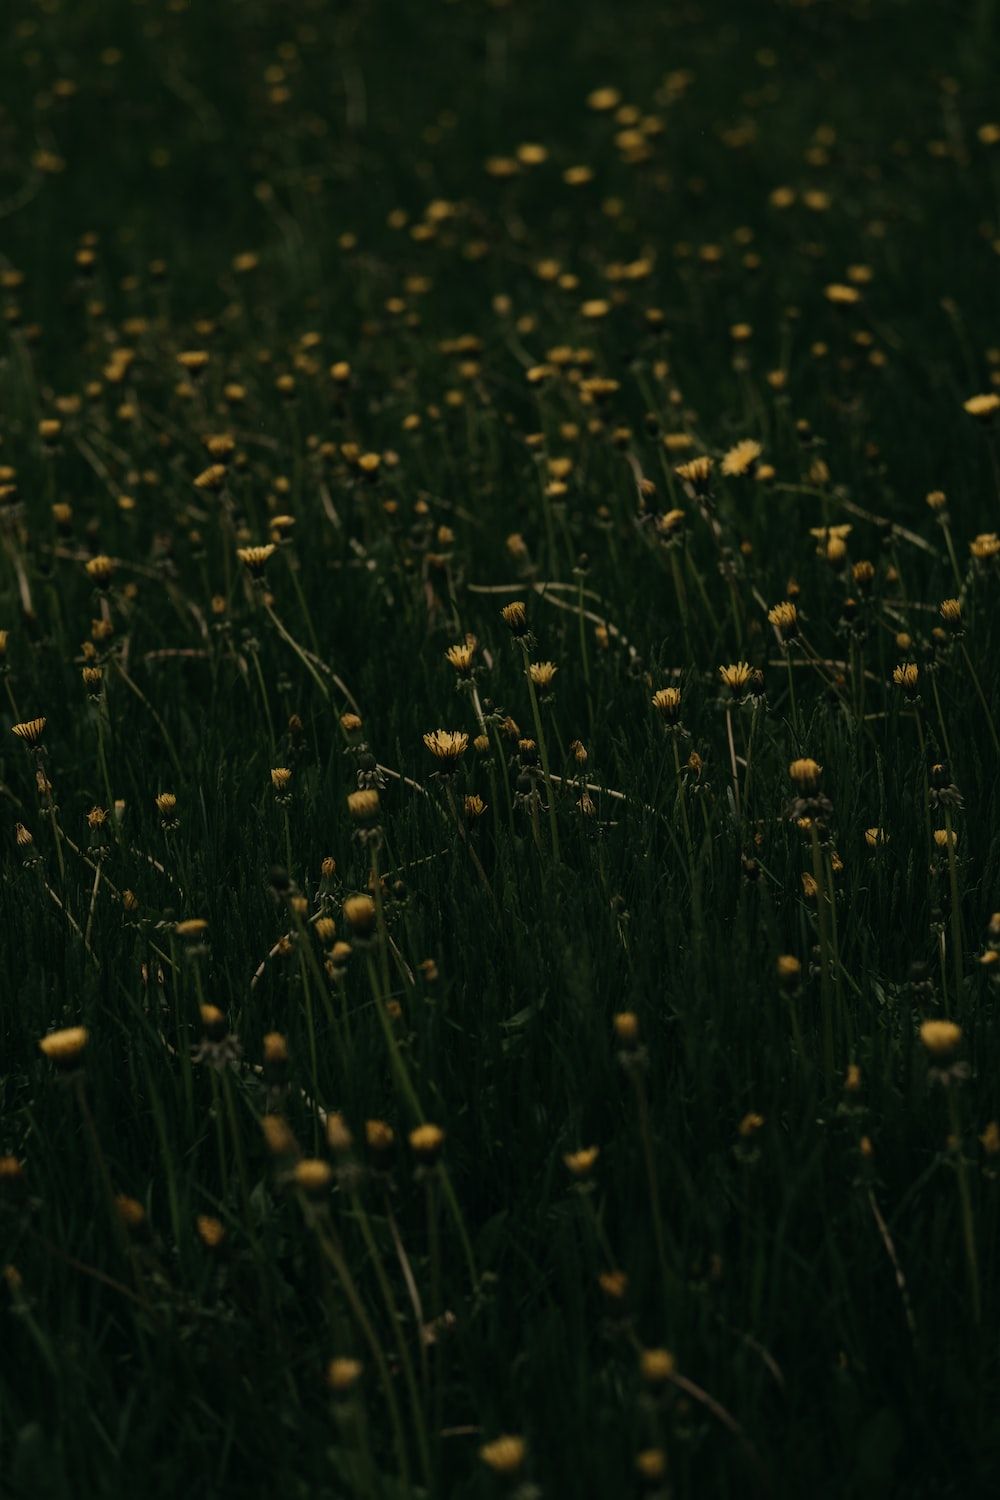 A field of dandelions at night. - Dark green